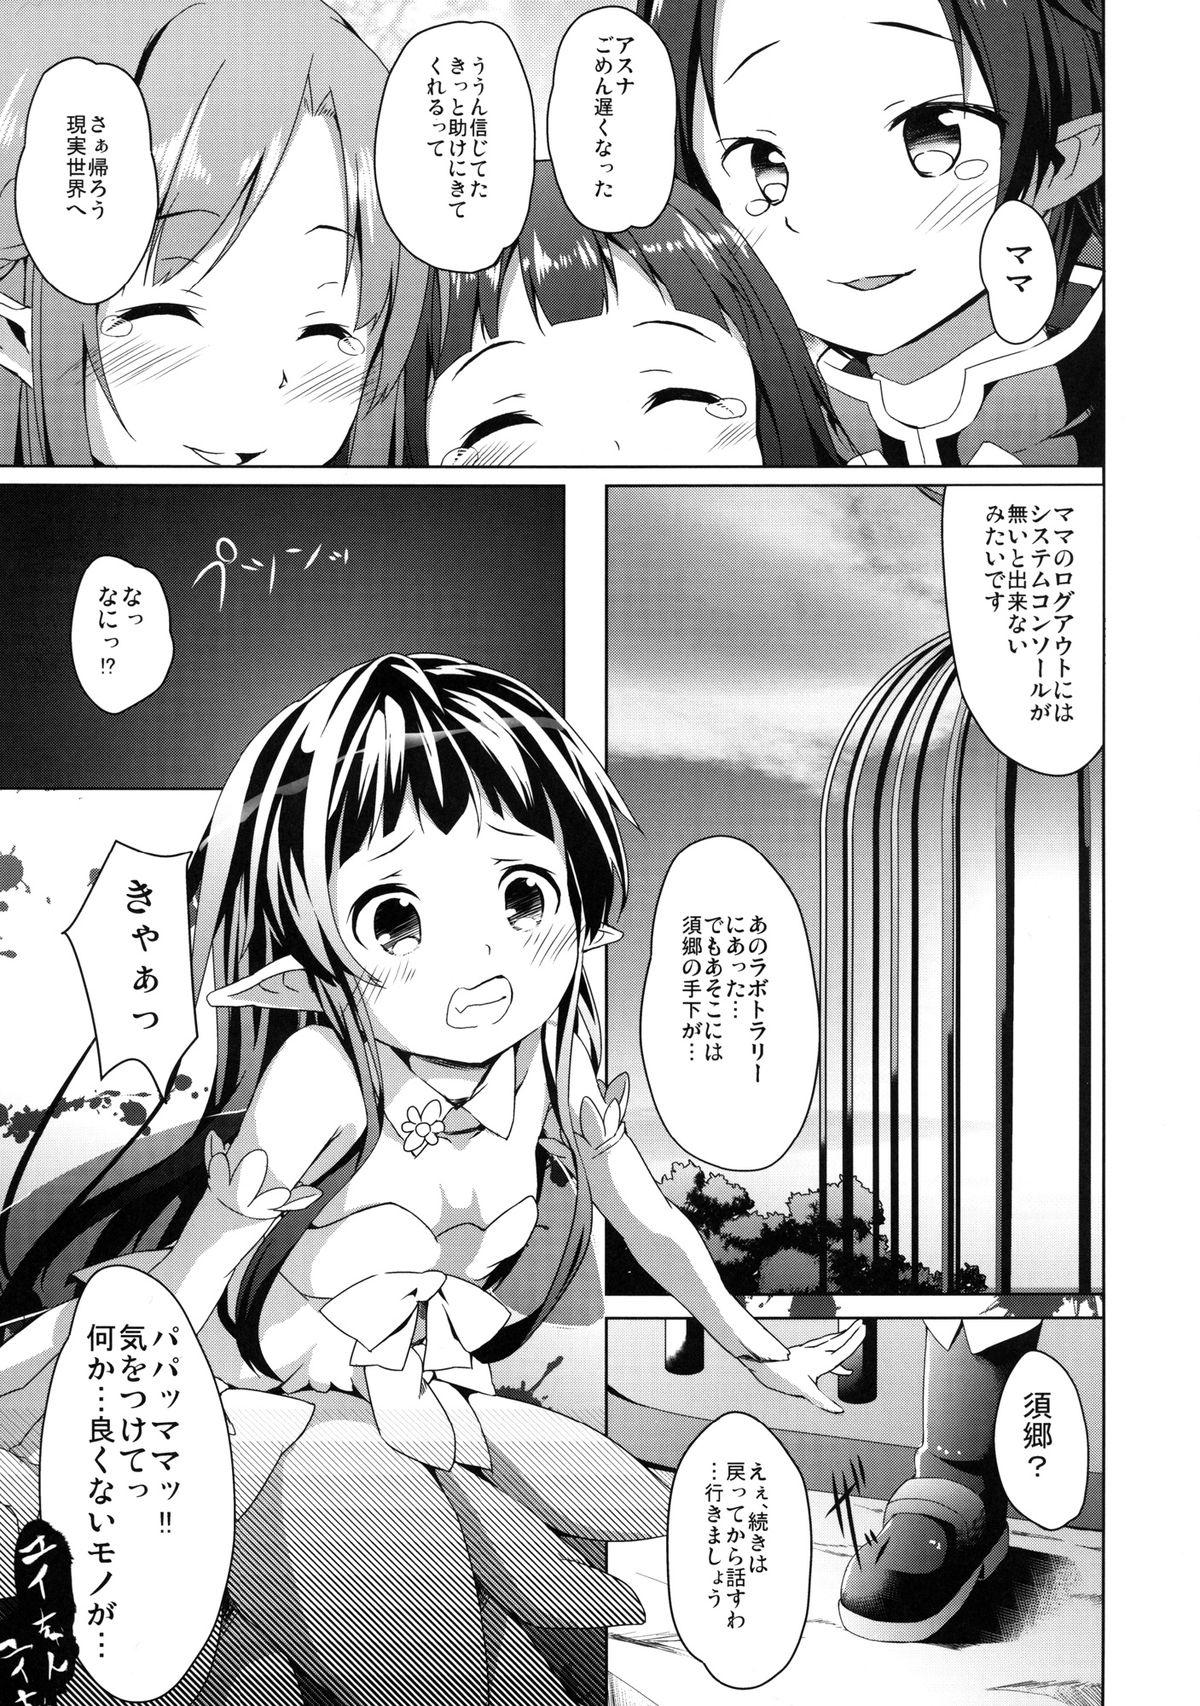 From Sao Yui Porn - Yui-chan BOKOO! - Page 3 - HentaiEra